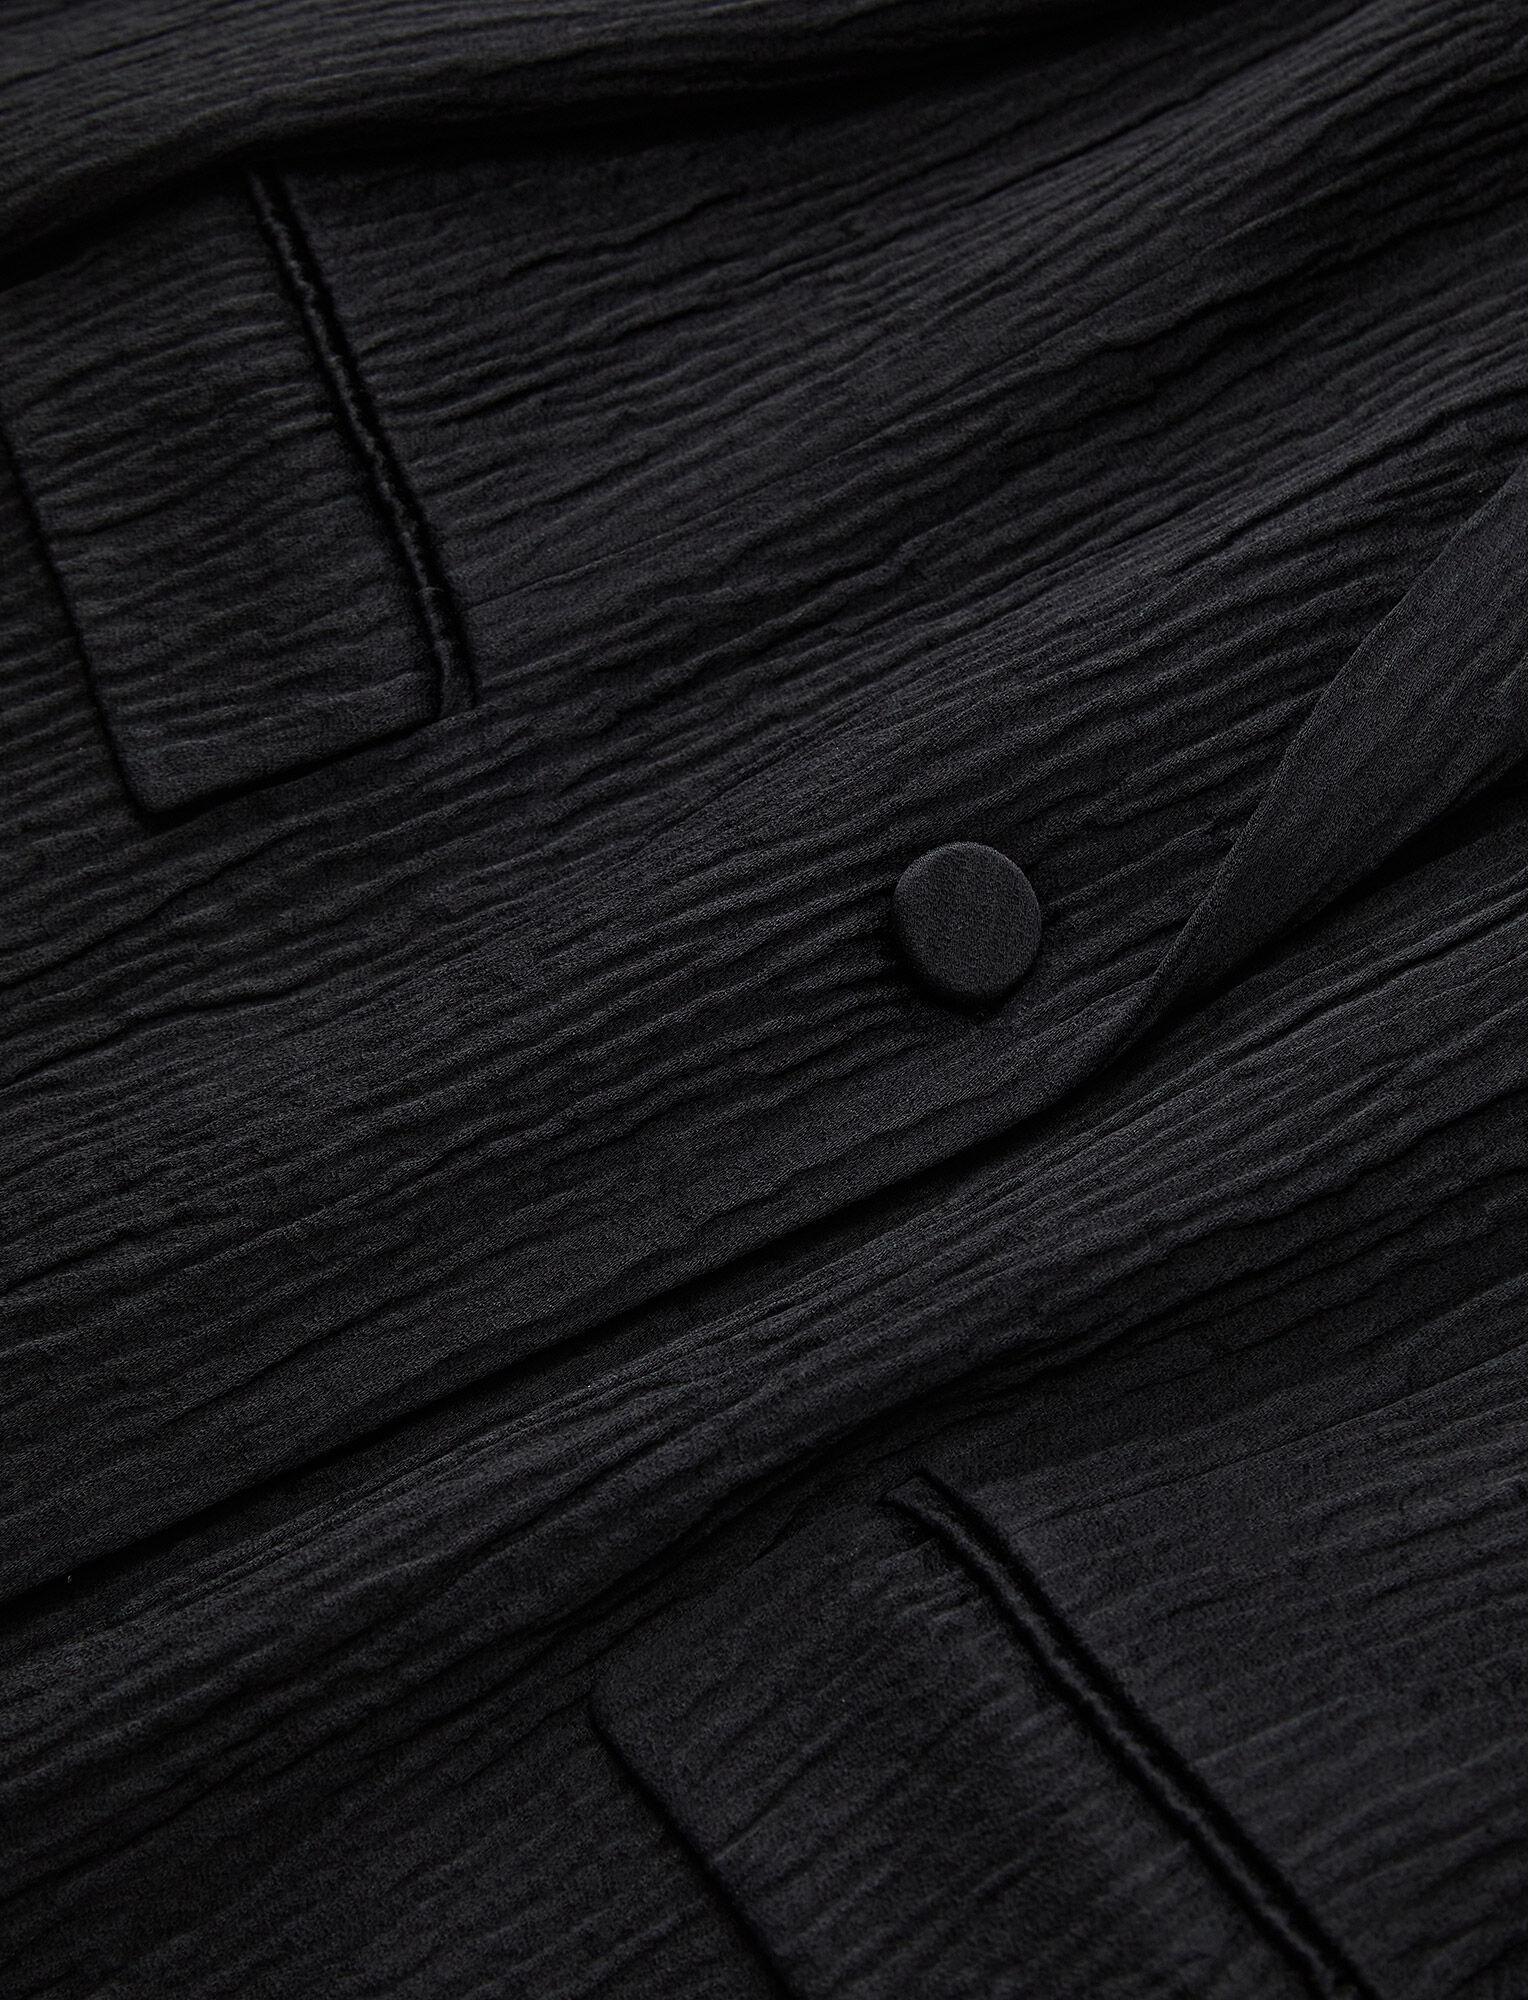 Joseph, Textured Viscose Joaquim Jacket, in Black